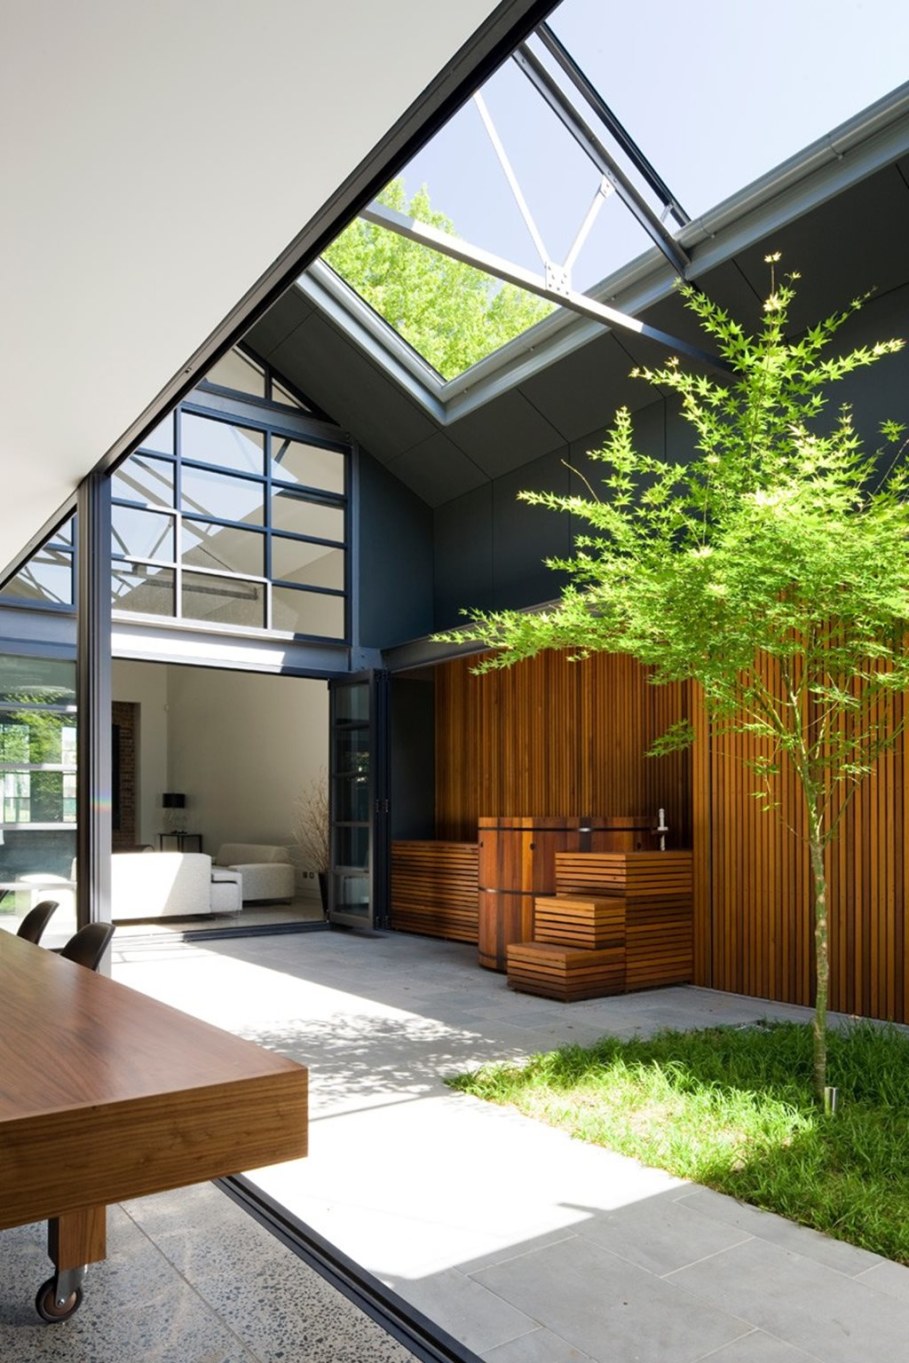 Grand loft house in Australia by Corben Architects studio - Living room